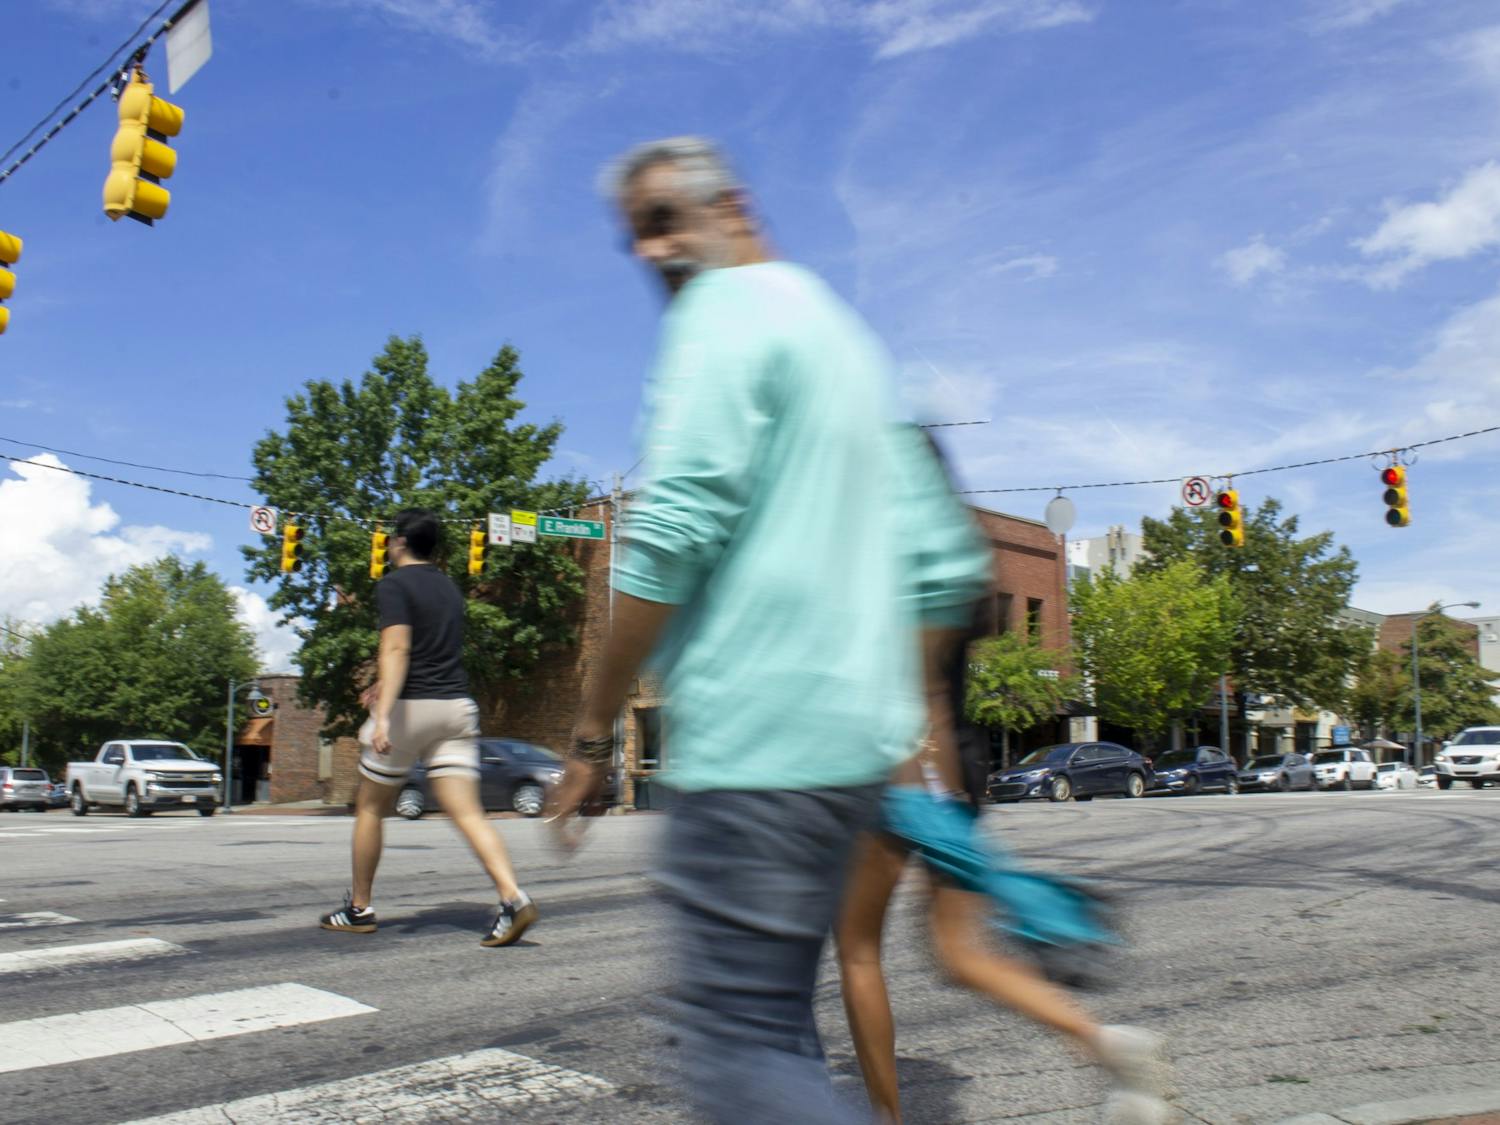 Pedestrians walk on Franklin Street in Chapel Hil, NC on September, 6 2022.